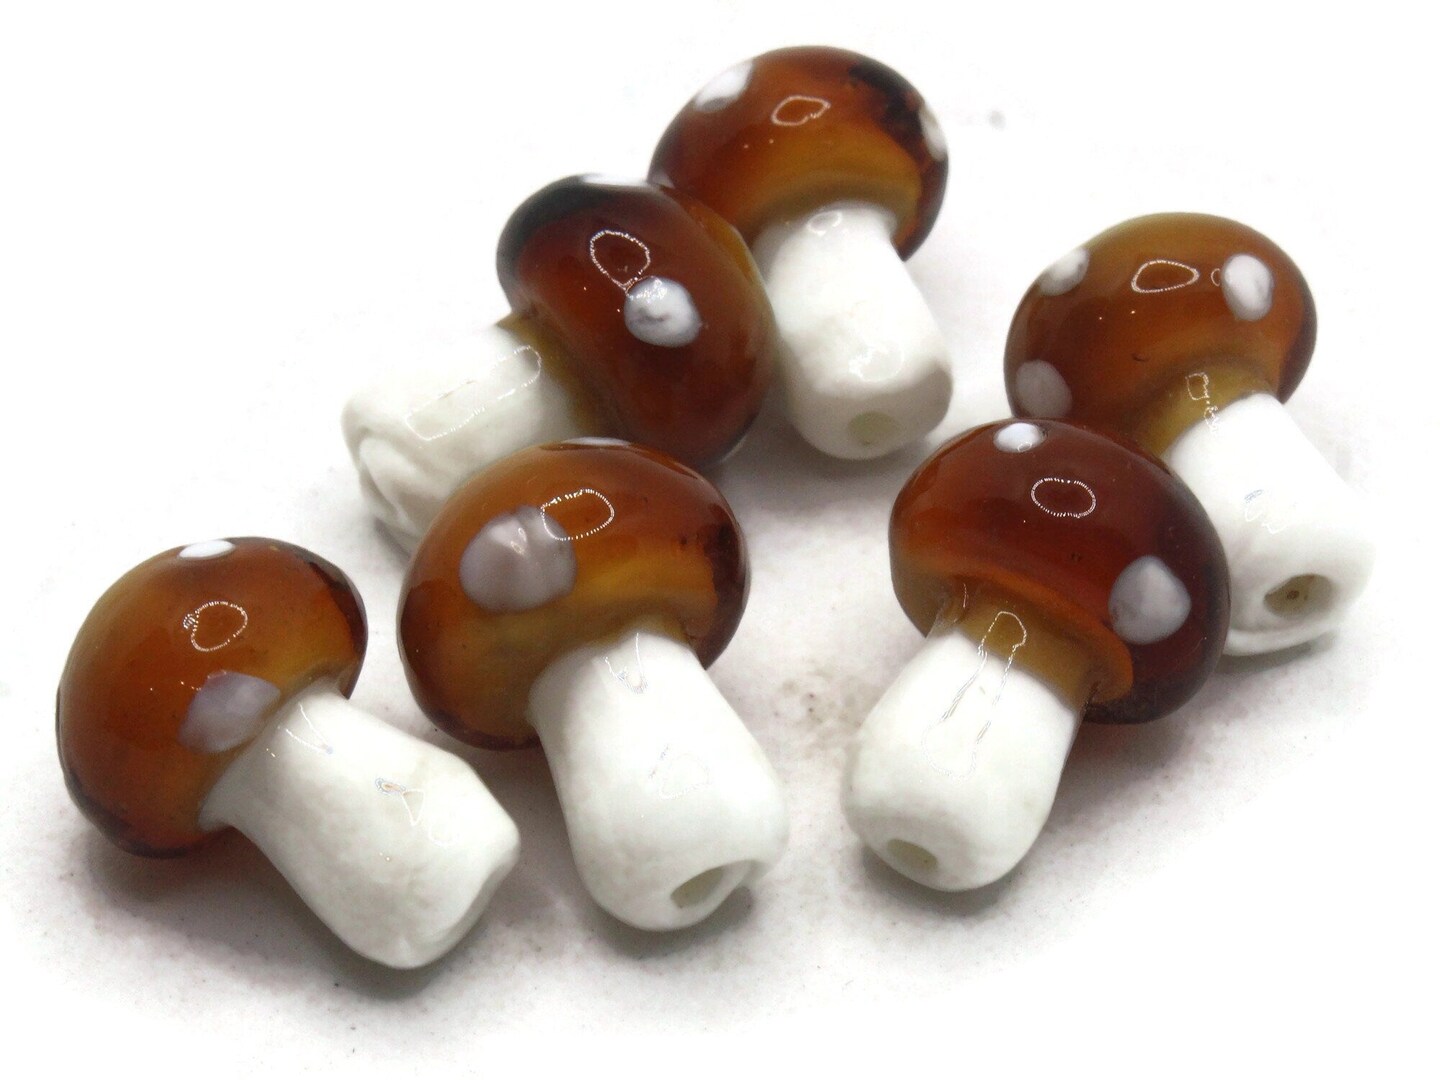 6 19mm White Mushroom Polka Dot Lampwork Glass Beads by Smileyboy Beads | Michaels